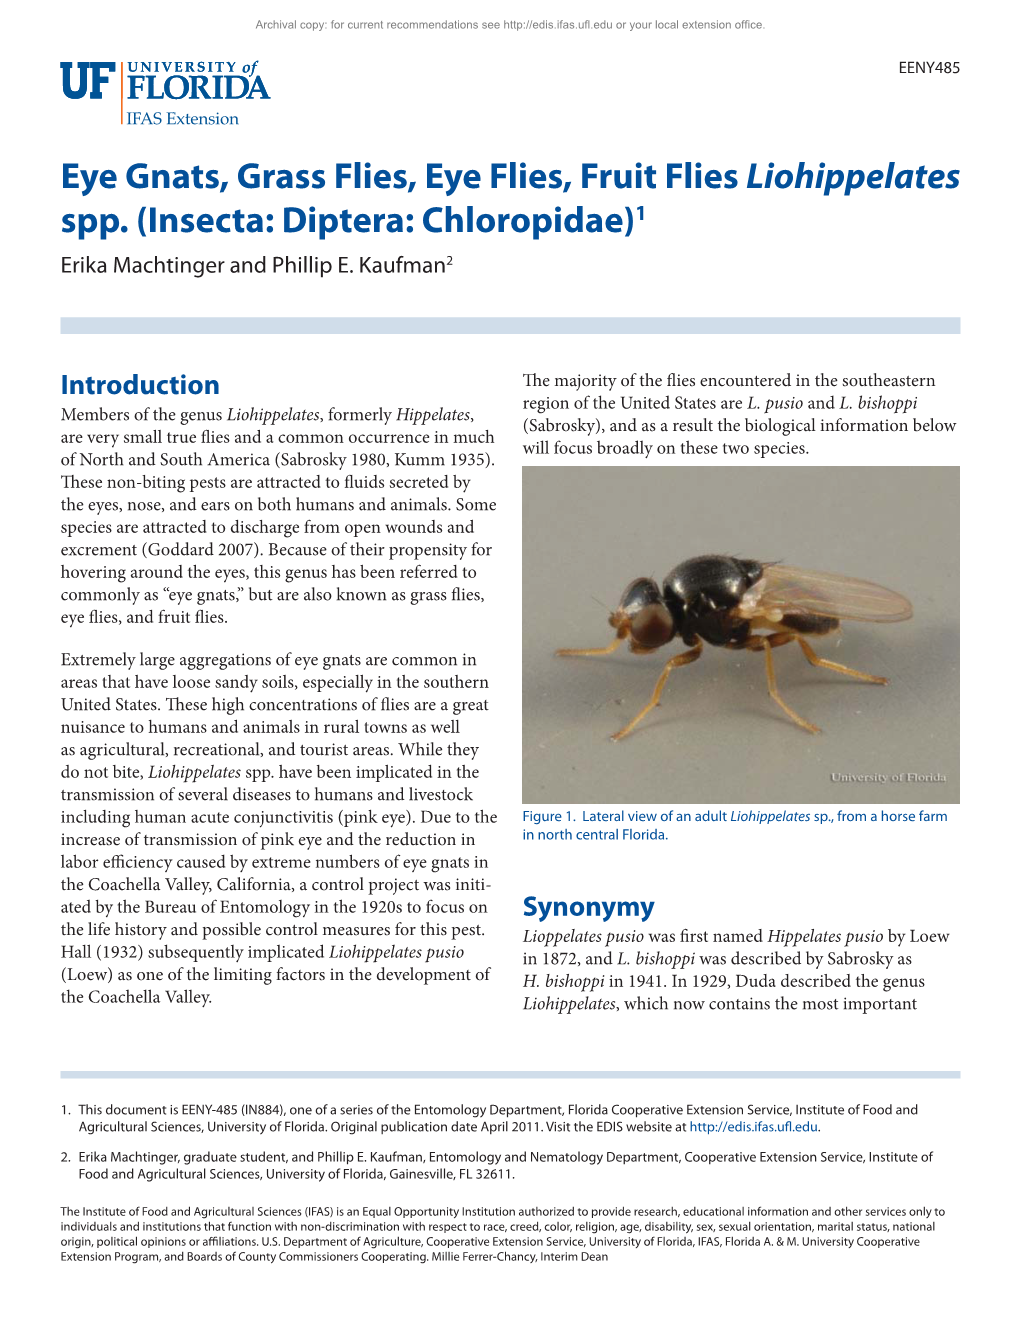 Eye Gnats, Grass Flies, Eye Flies, Fruit Flies Liohippelates Spp. (Insecta: Diptera: Chloropidae)1 Erika Machtinger and Phillip E